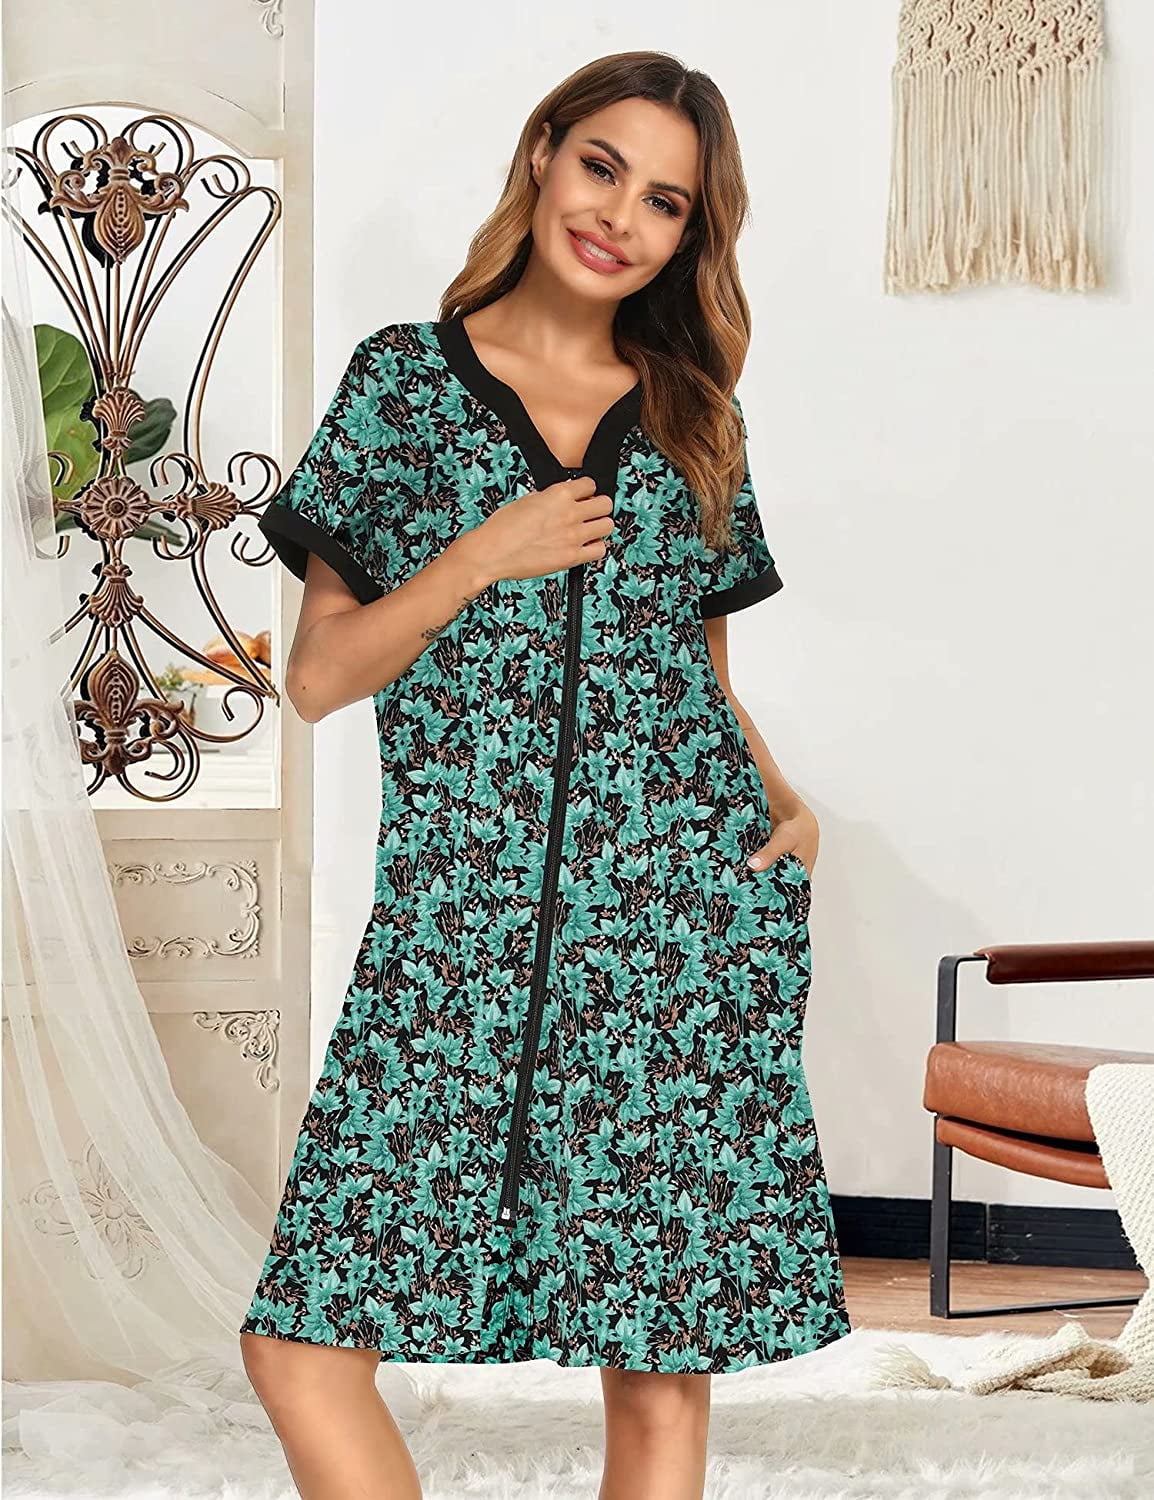 Bloggerlove Cotton Nightgowns for Women V Neck Sleepwear Night Shirts Sleeveless Sleep Dress S-XXL